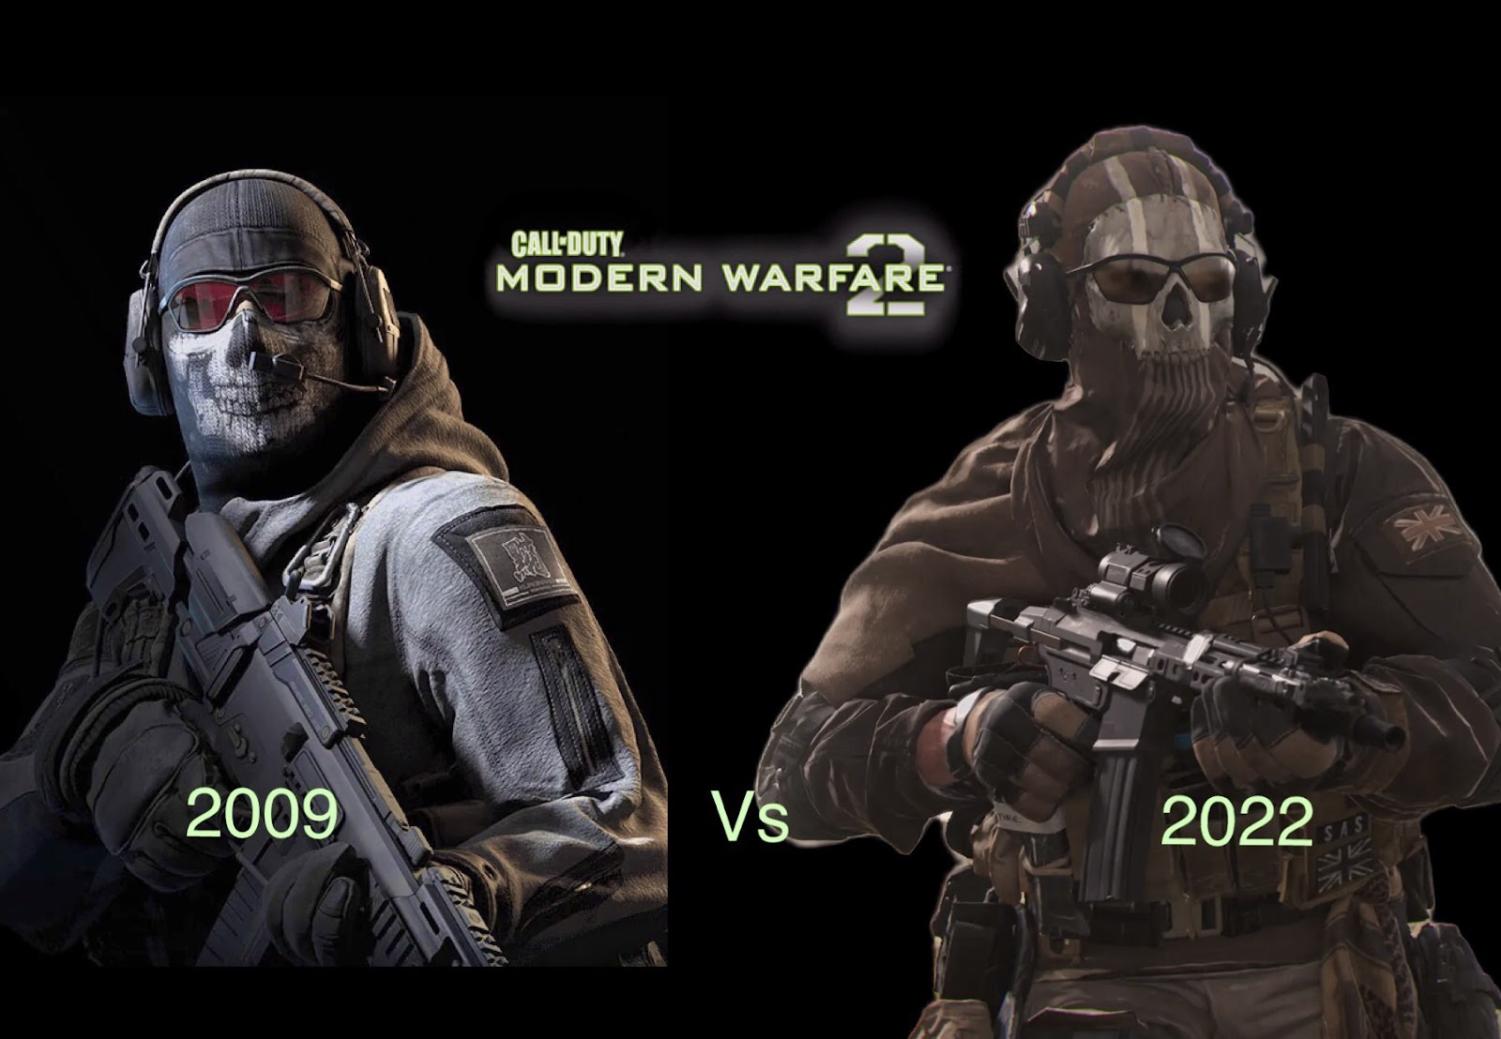 Is Modern Warfare 2 (2009) worth playing in 2022?